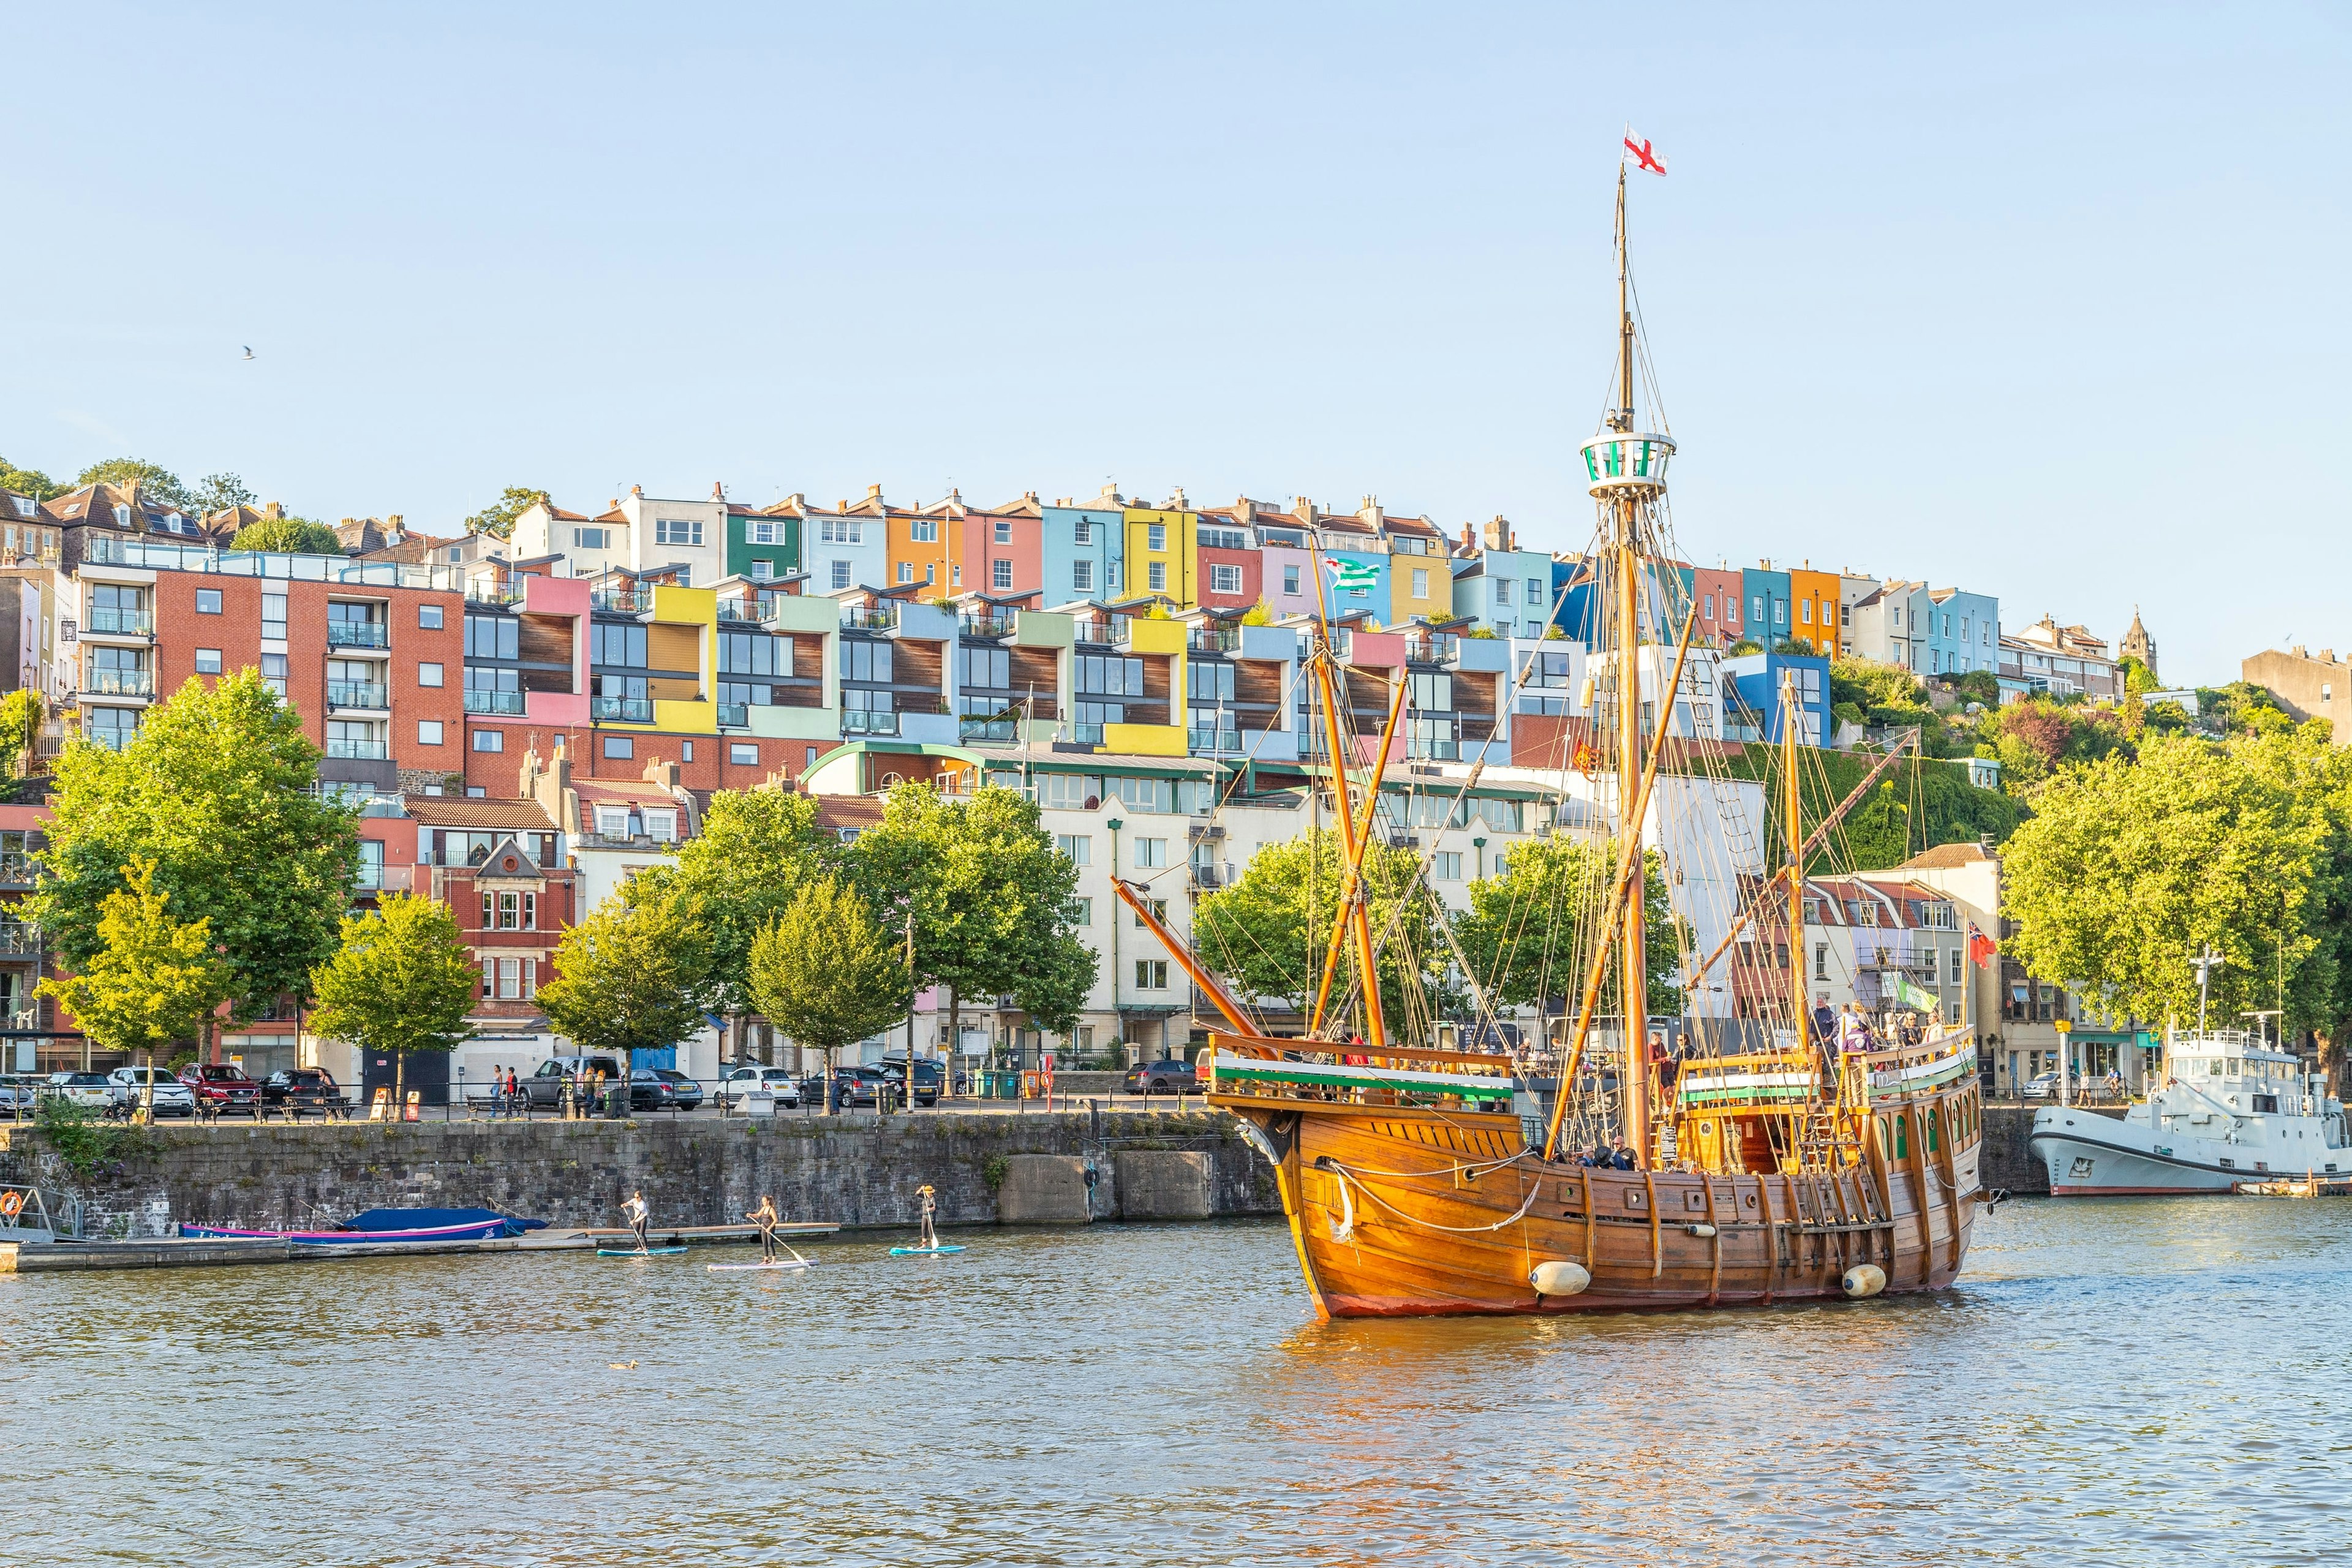 Waterfront Bristol: The Views & History